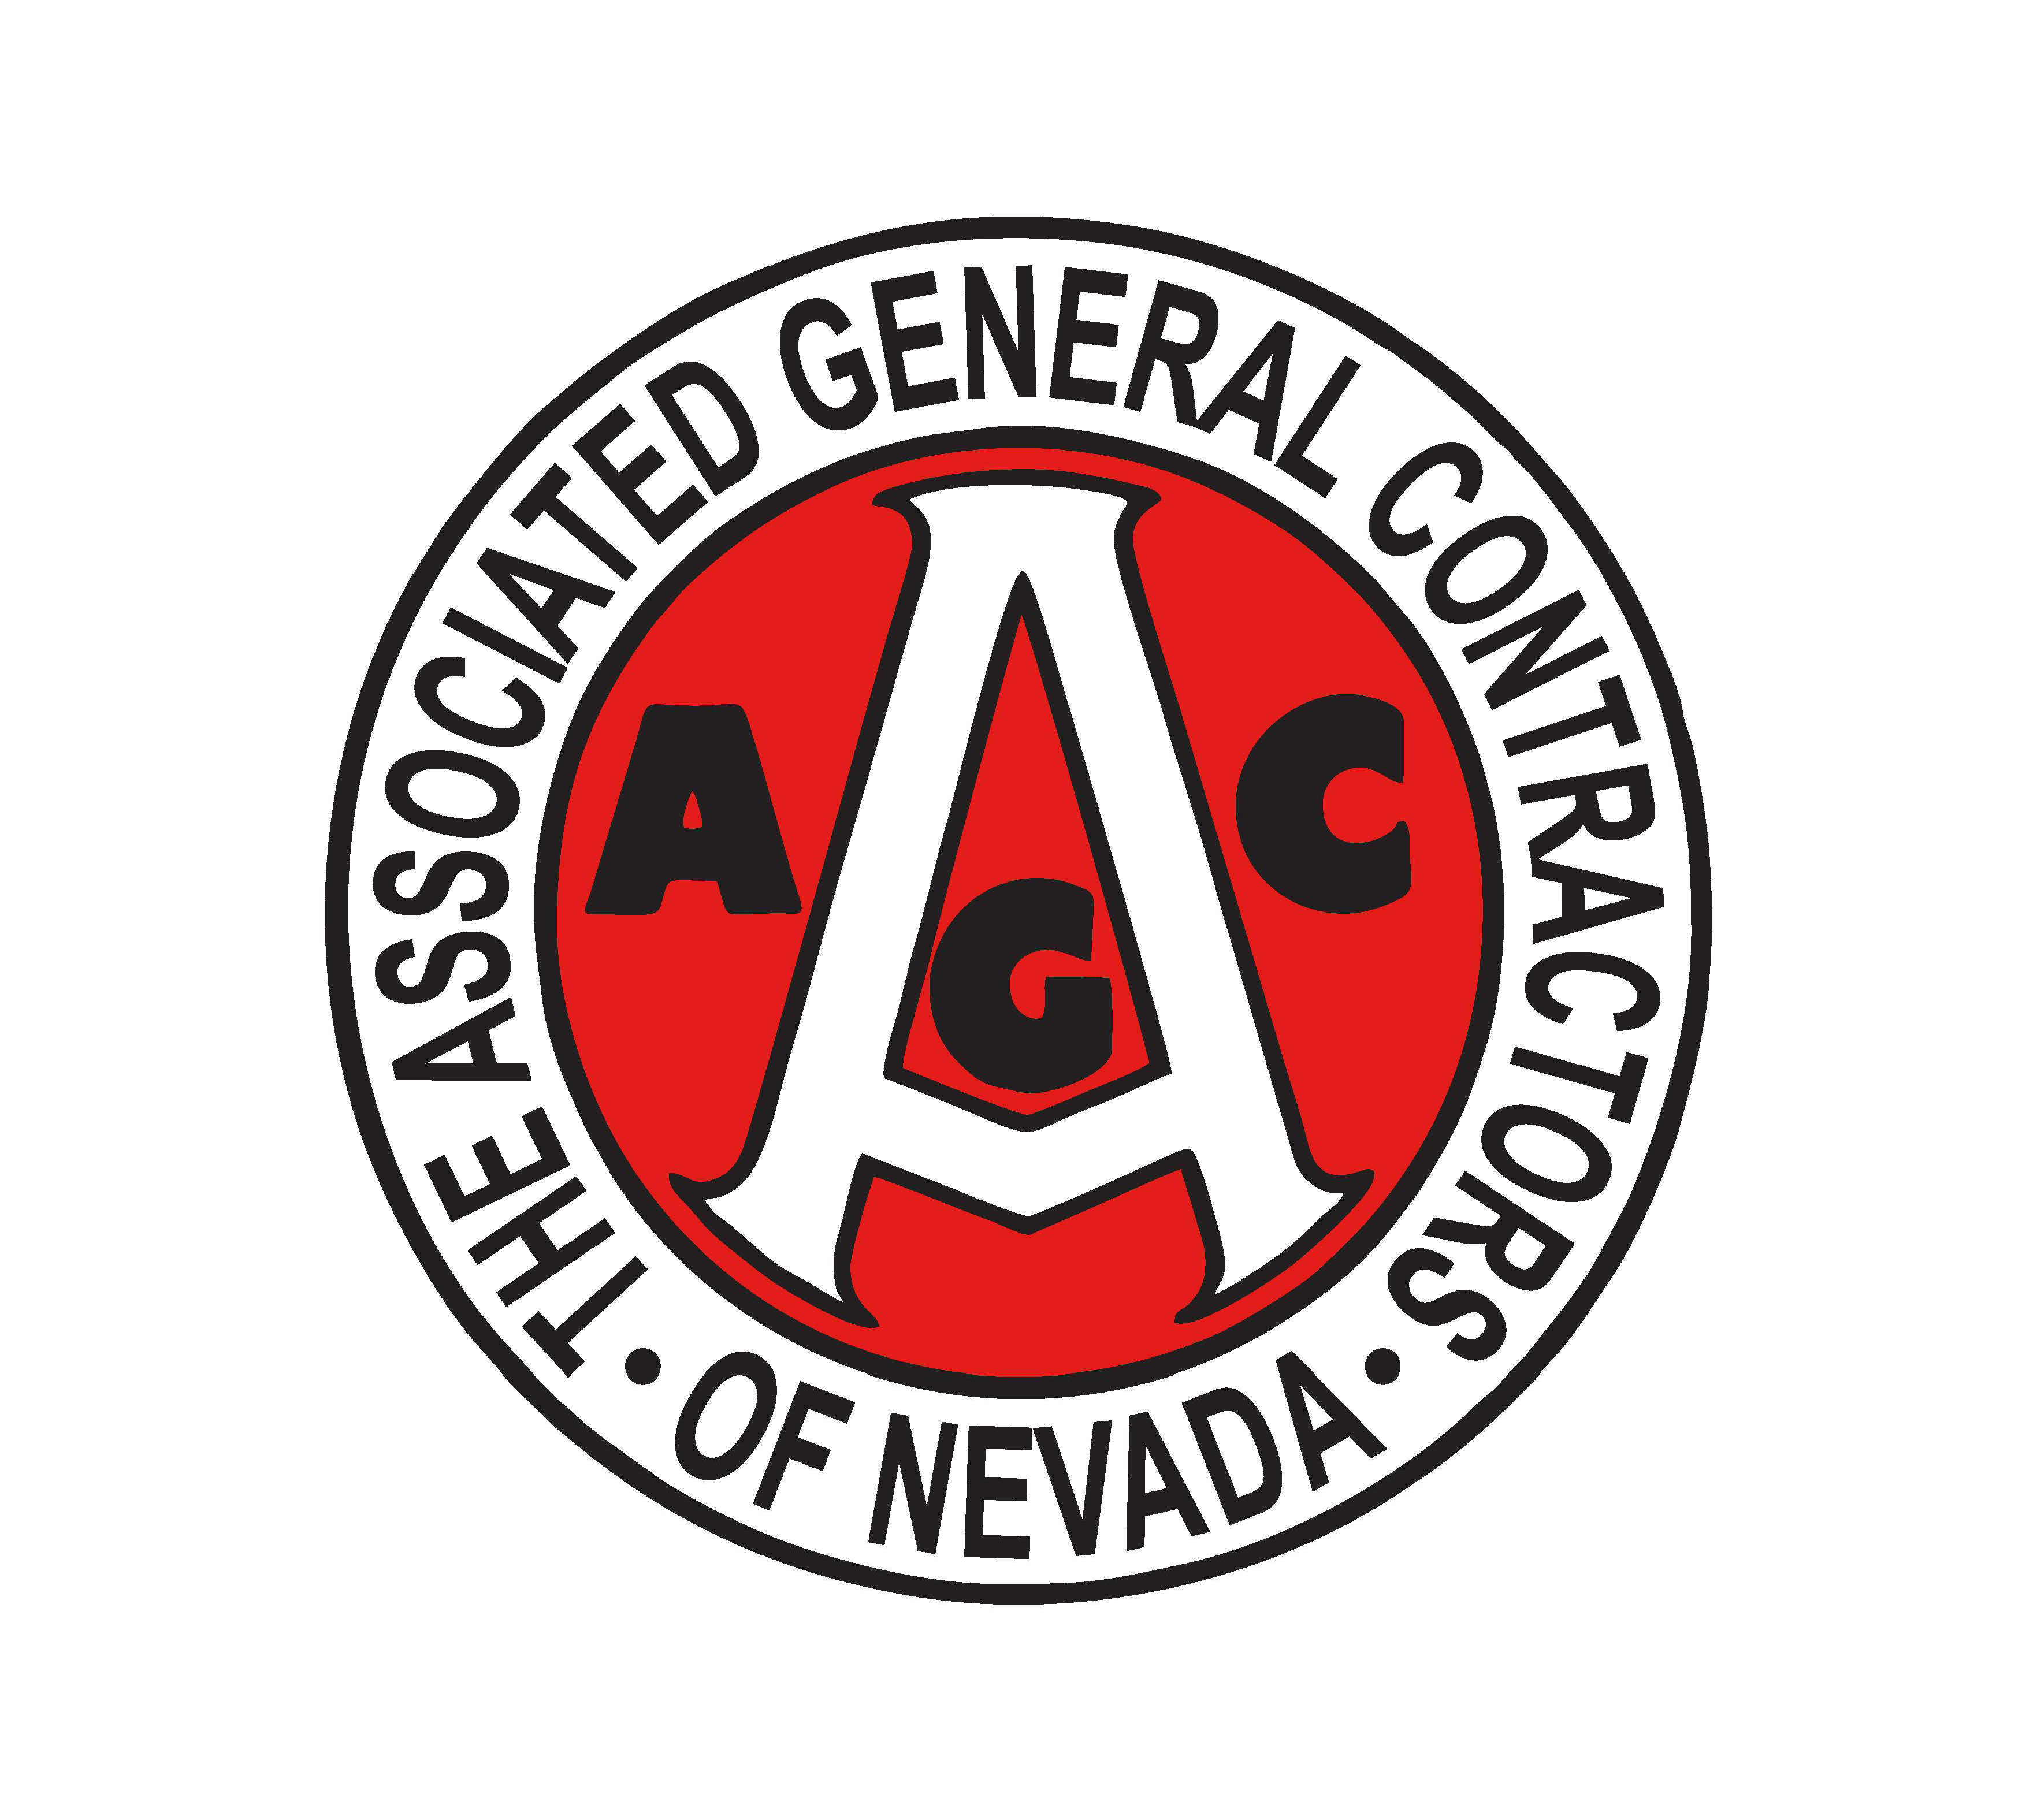 AGC Logo - Nevada Chapter AGC Mill Street, Reno, NV 89502